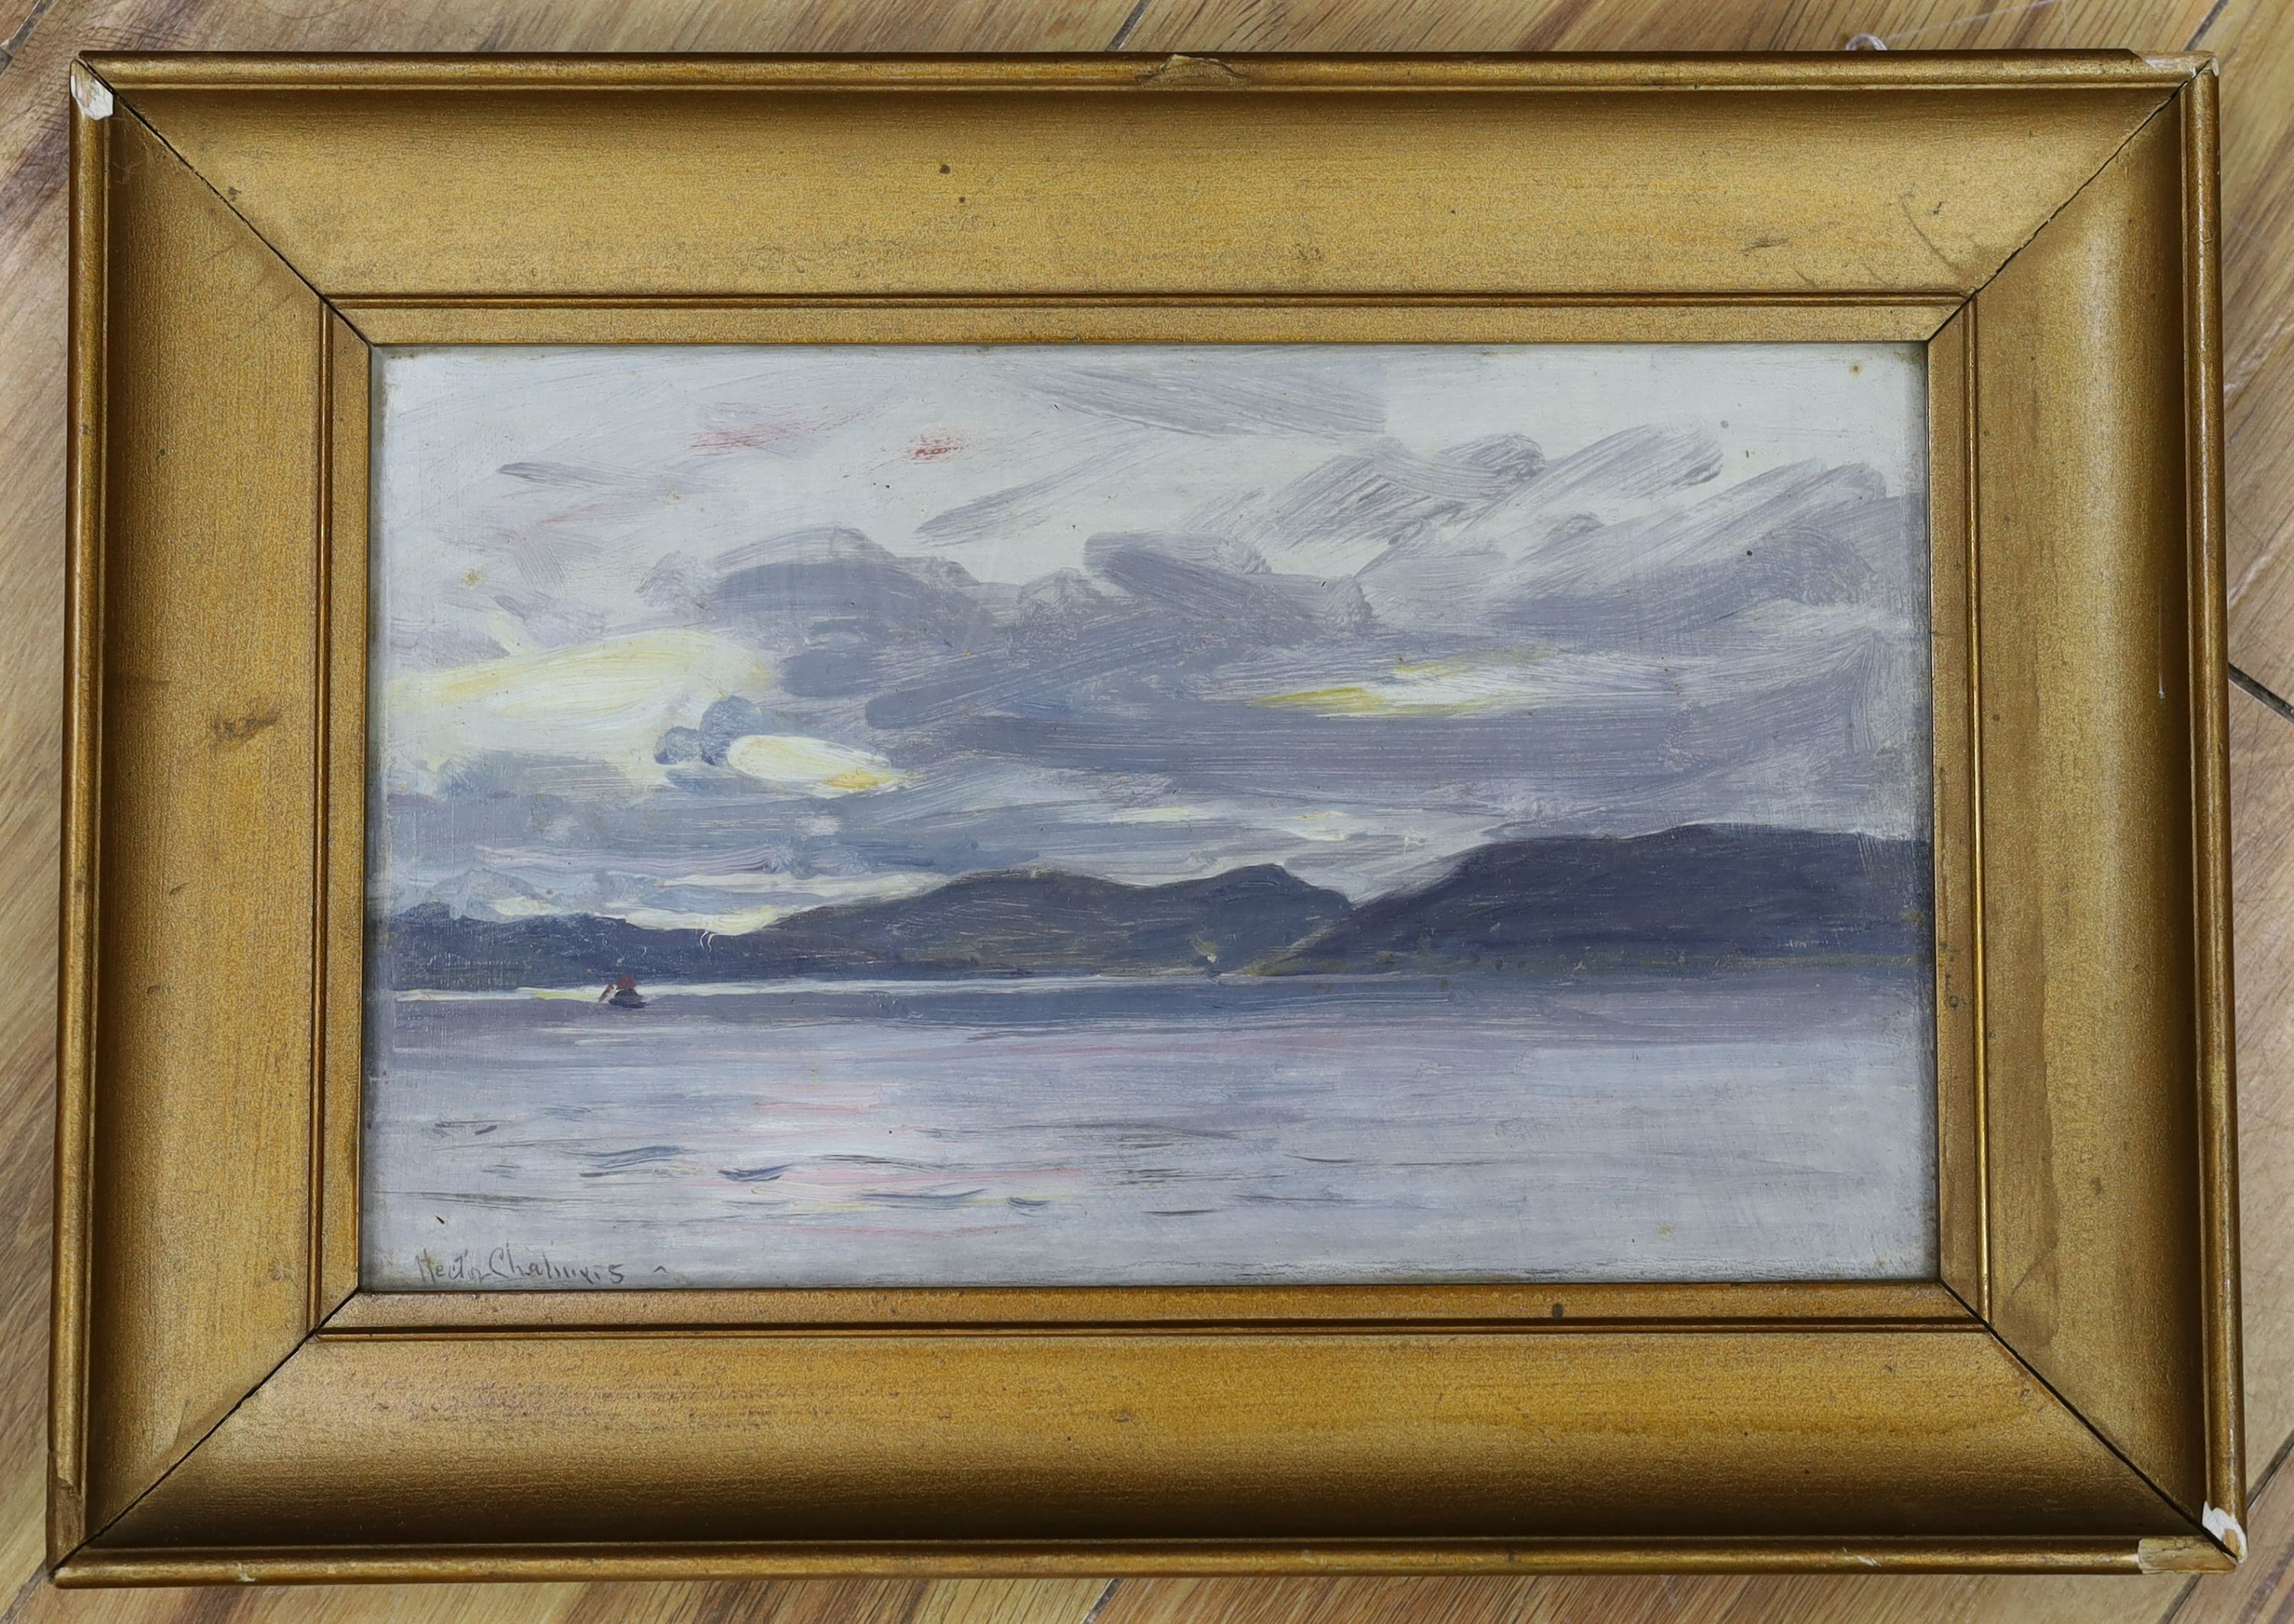 Hector Chalmers (1849-1943), oil on board, Scottish coastal landscape, signed, 16 x 28cm